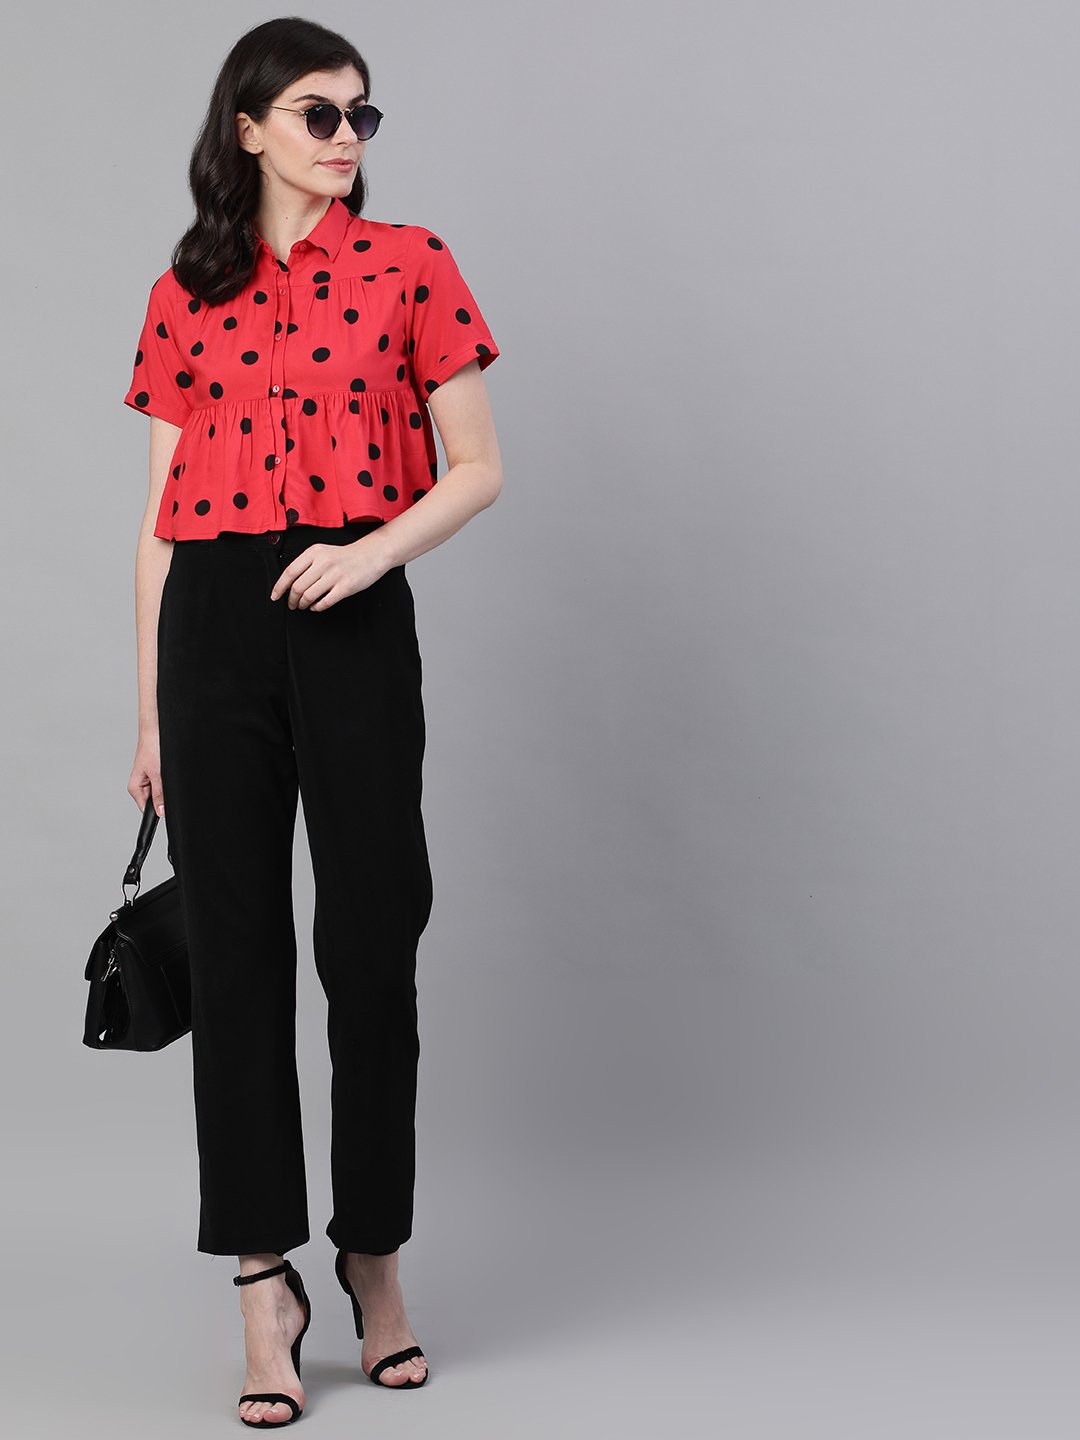 Ishin Women's Rayon Red Polka Dot Printed Top